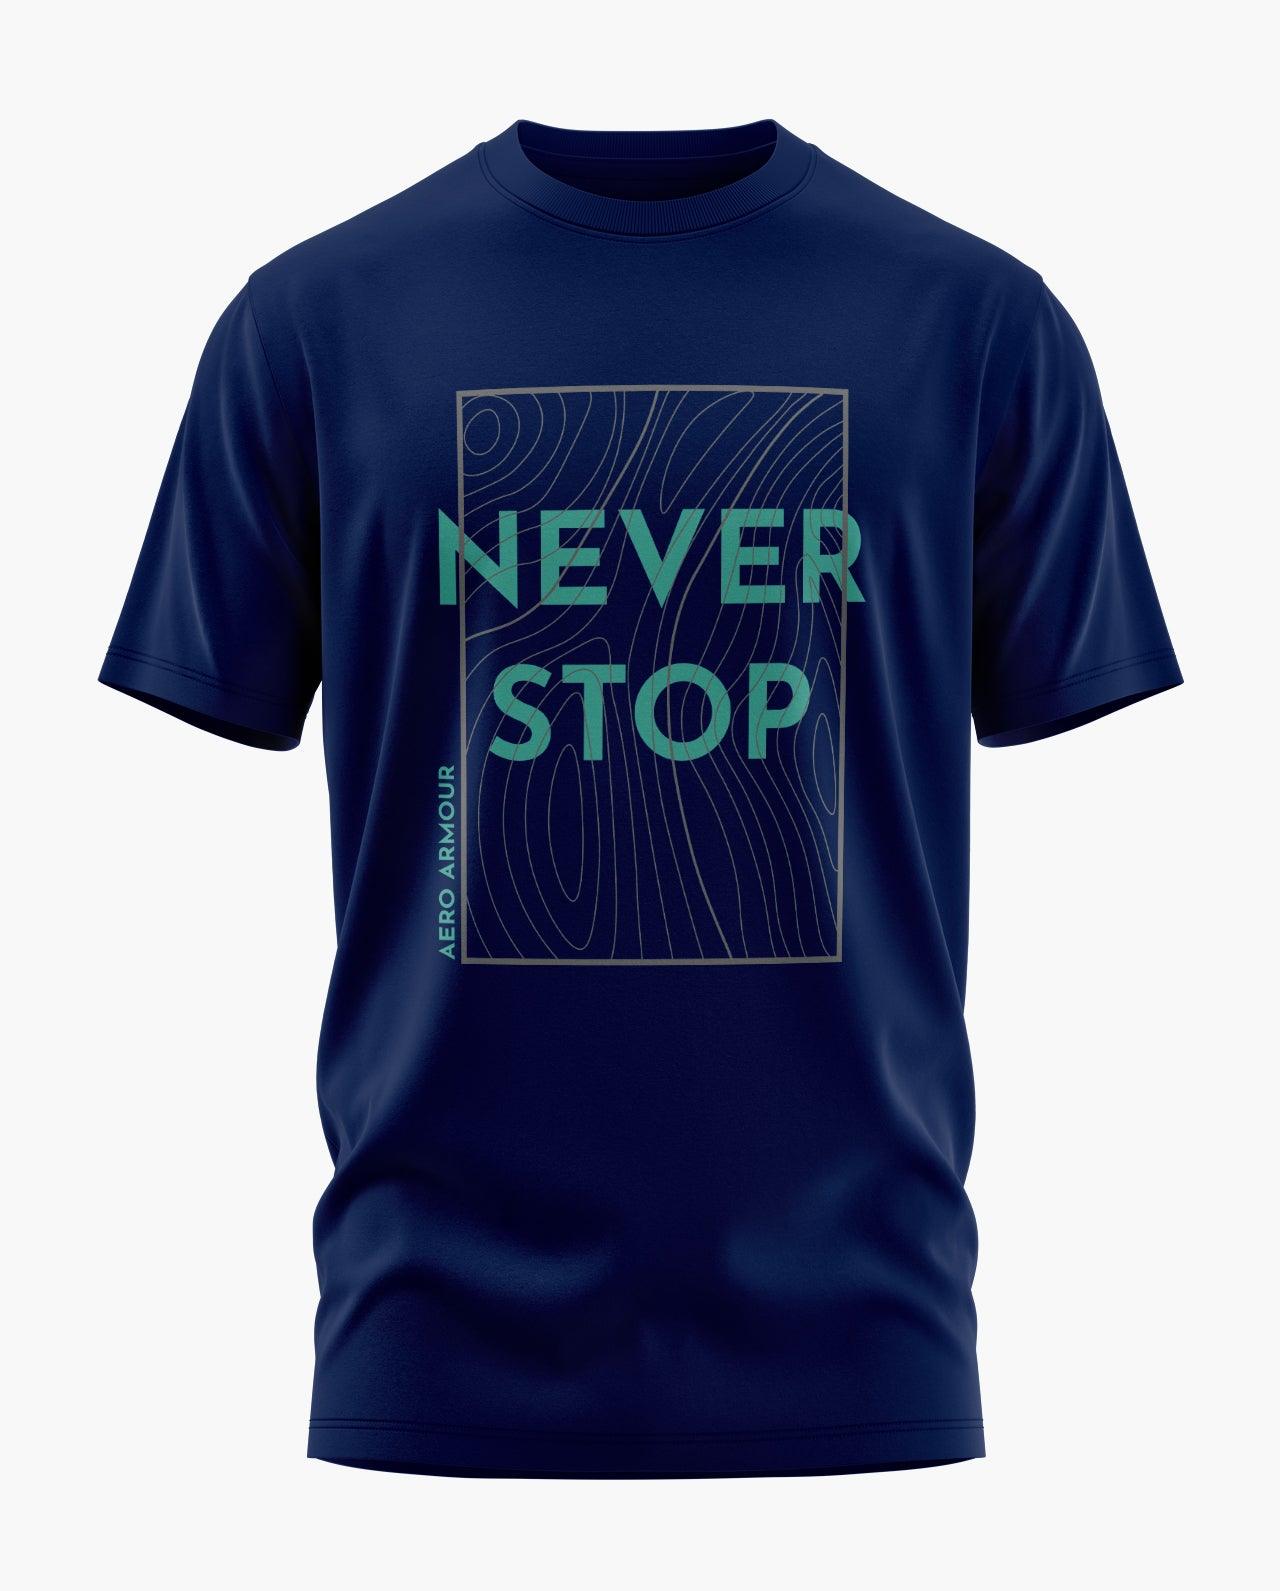 Never Stops T-Shirt - Aero Armour